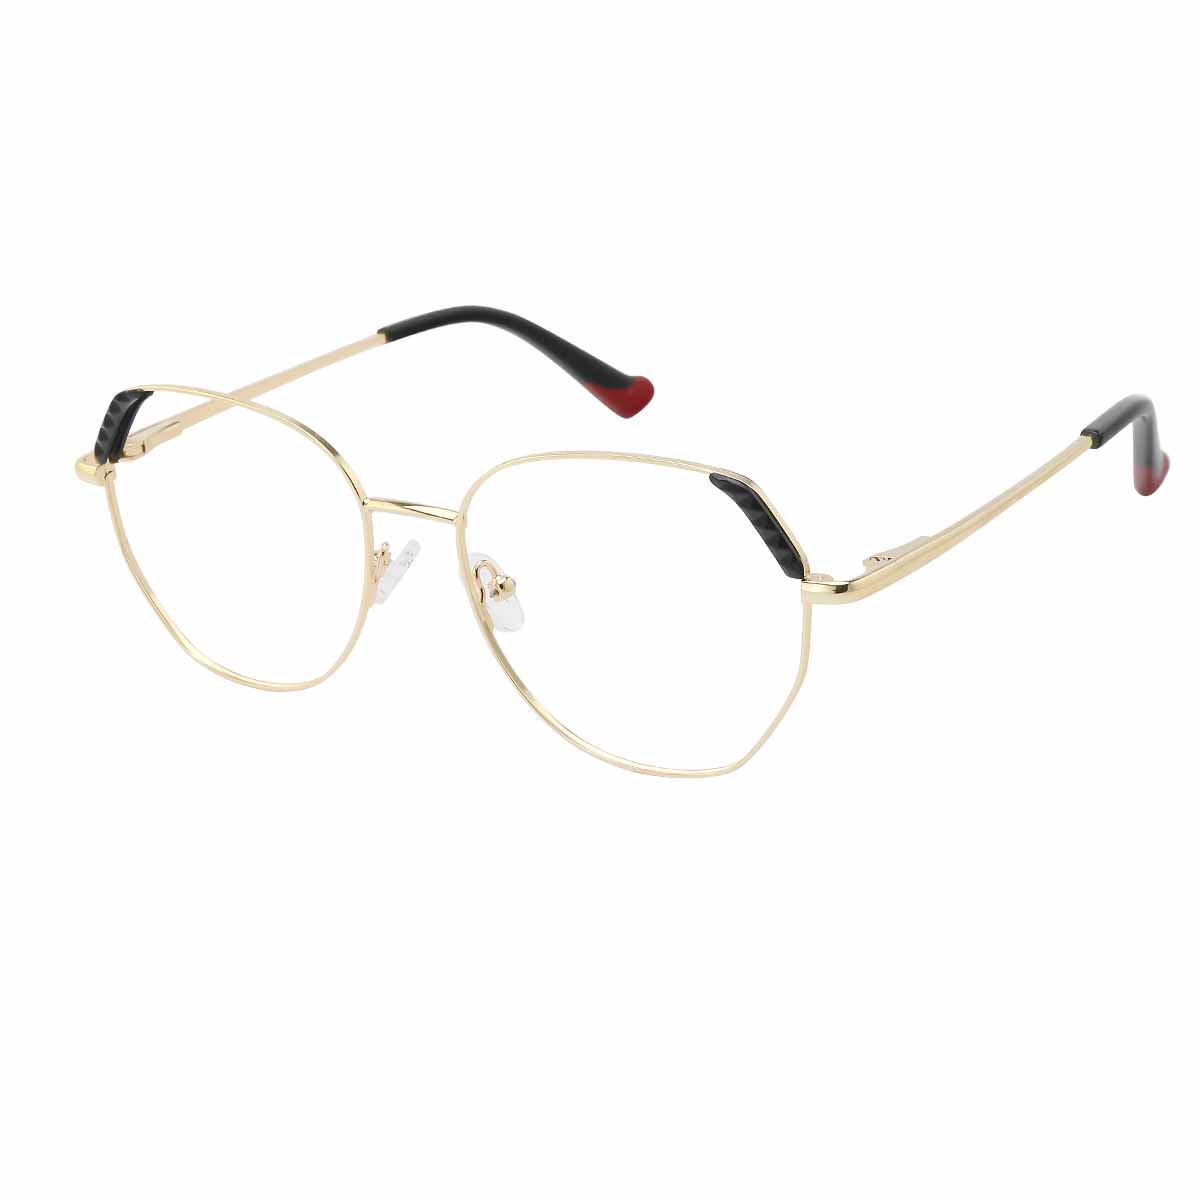 Corinna - Oval Gold/Black Reading Glasses for Women